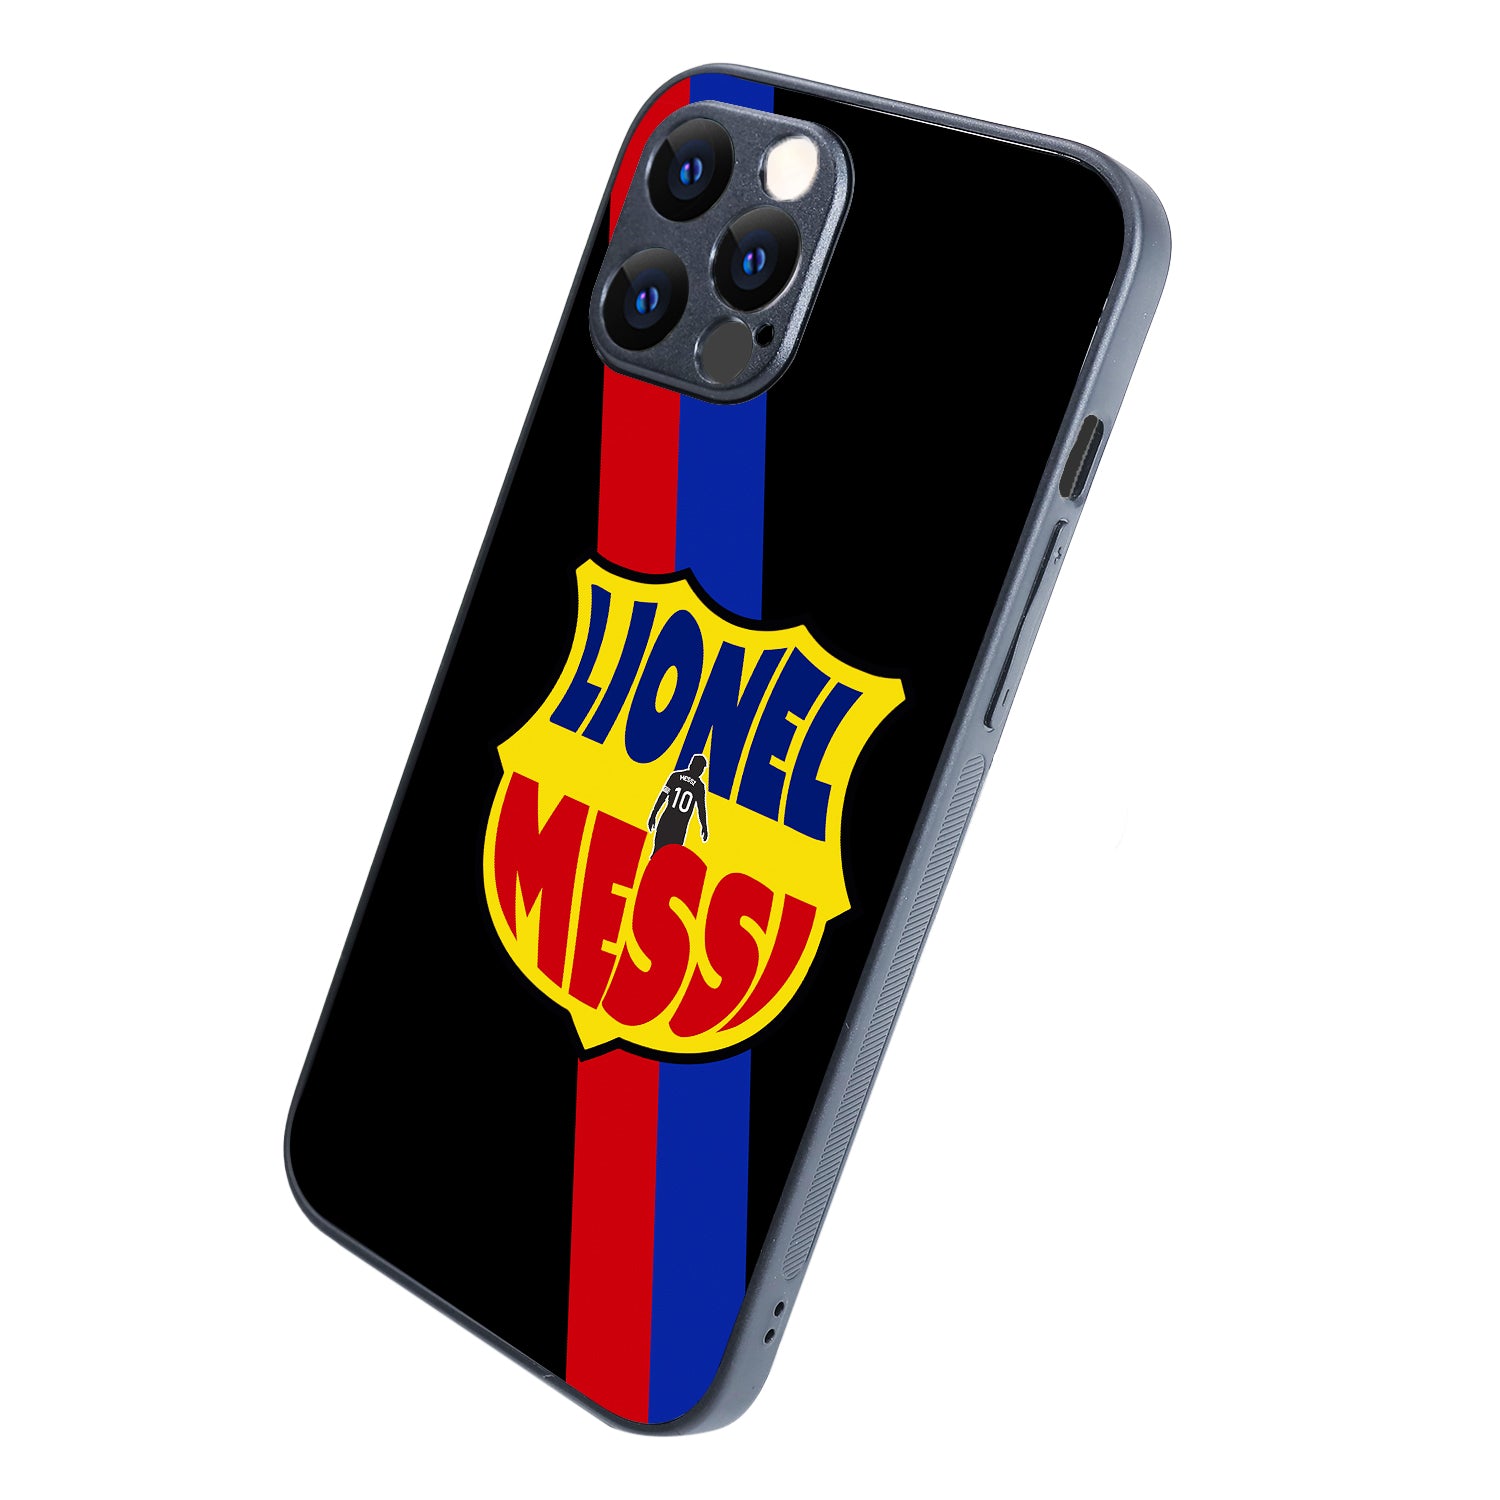 Lionel Messi Sports iPhone 12 Pro Max Case